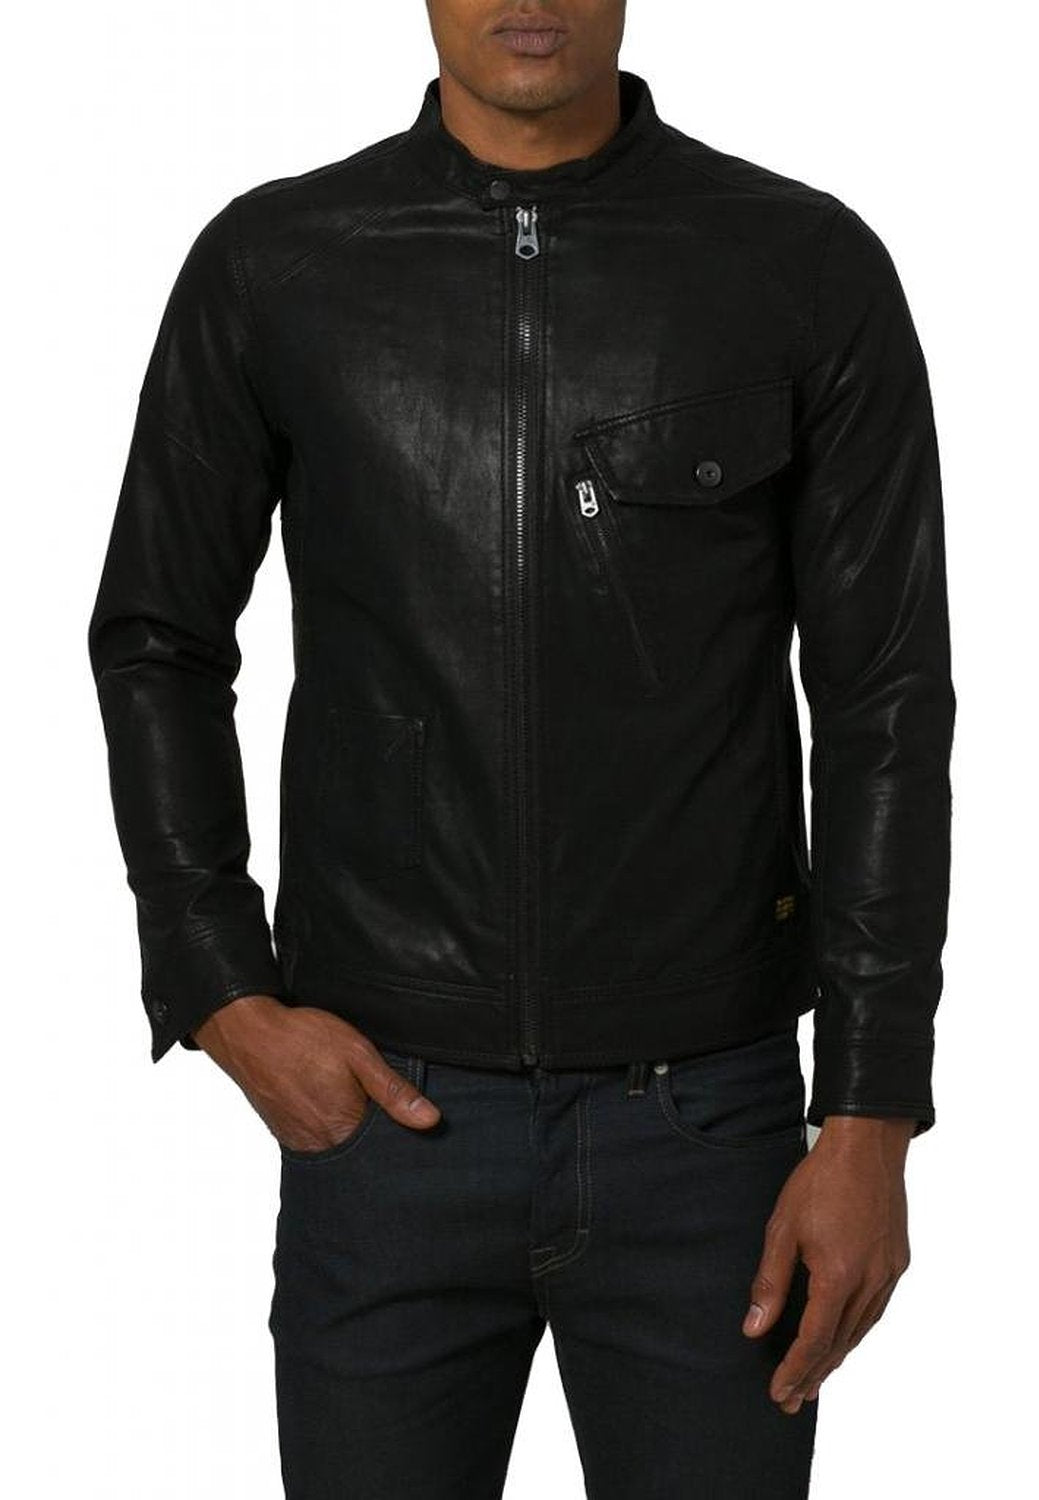 Leather Jackets Hub Mens Genuine Cowhide Leather Jacket (Black, Racer Jacket) - 1501550